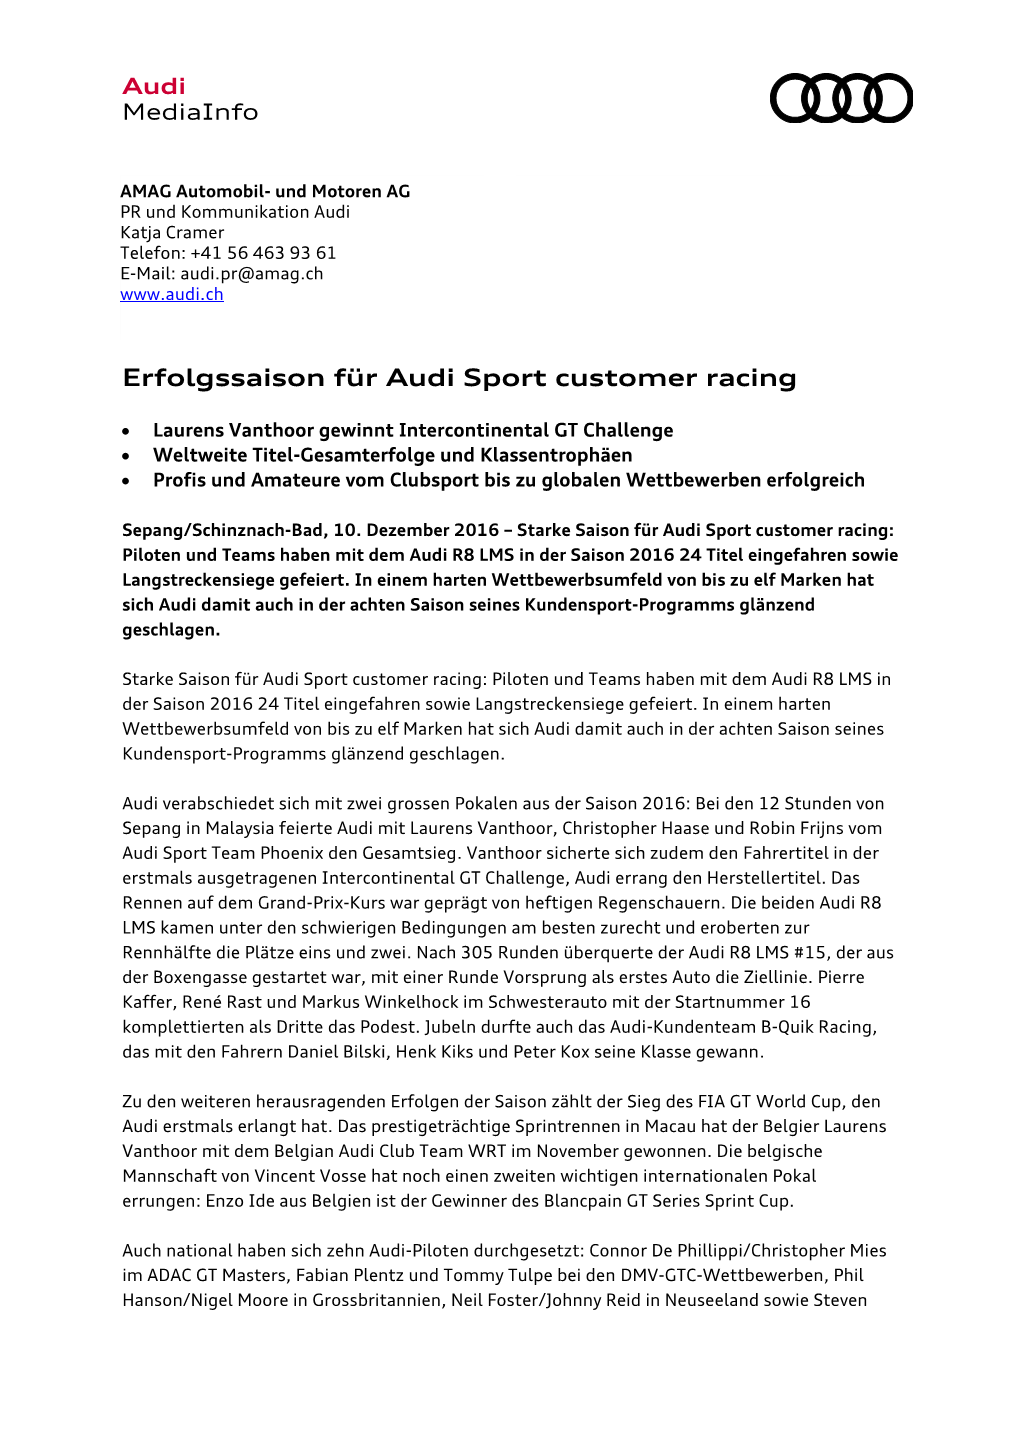 Erfolgssaison Für Audi Sport Customer Racing